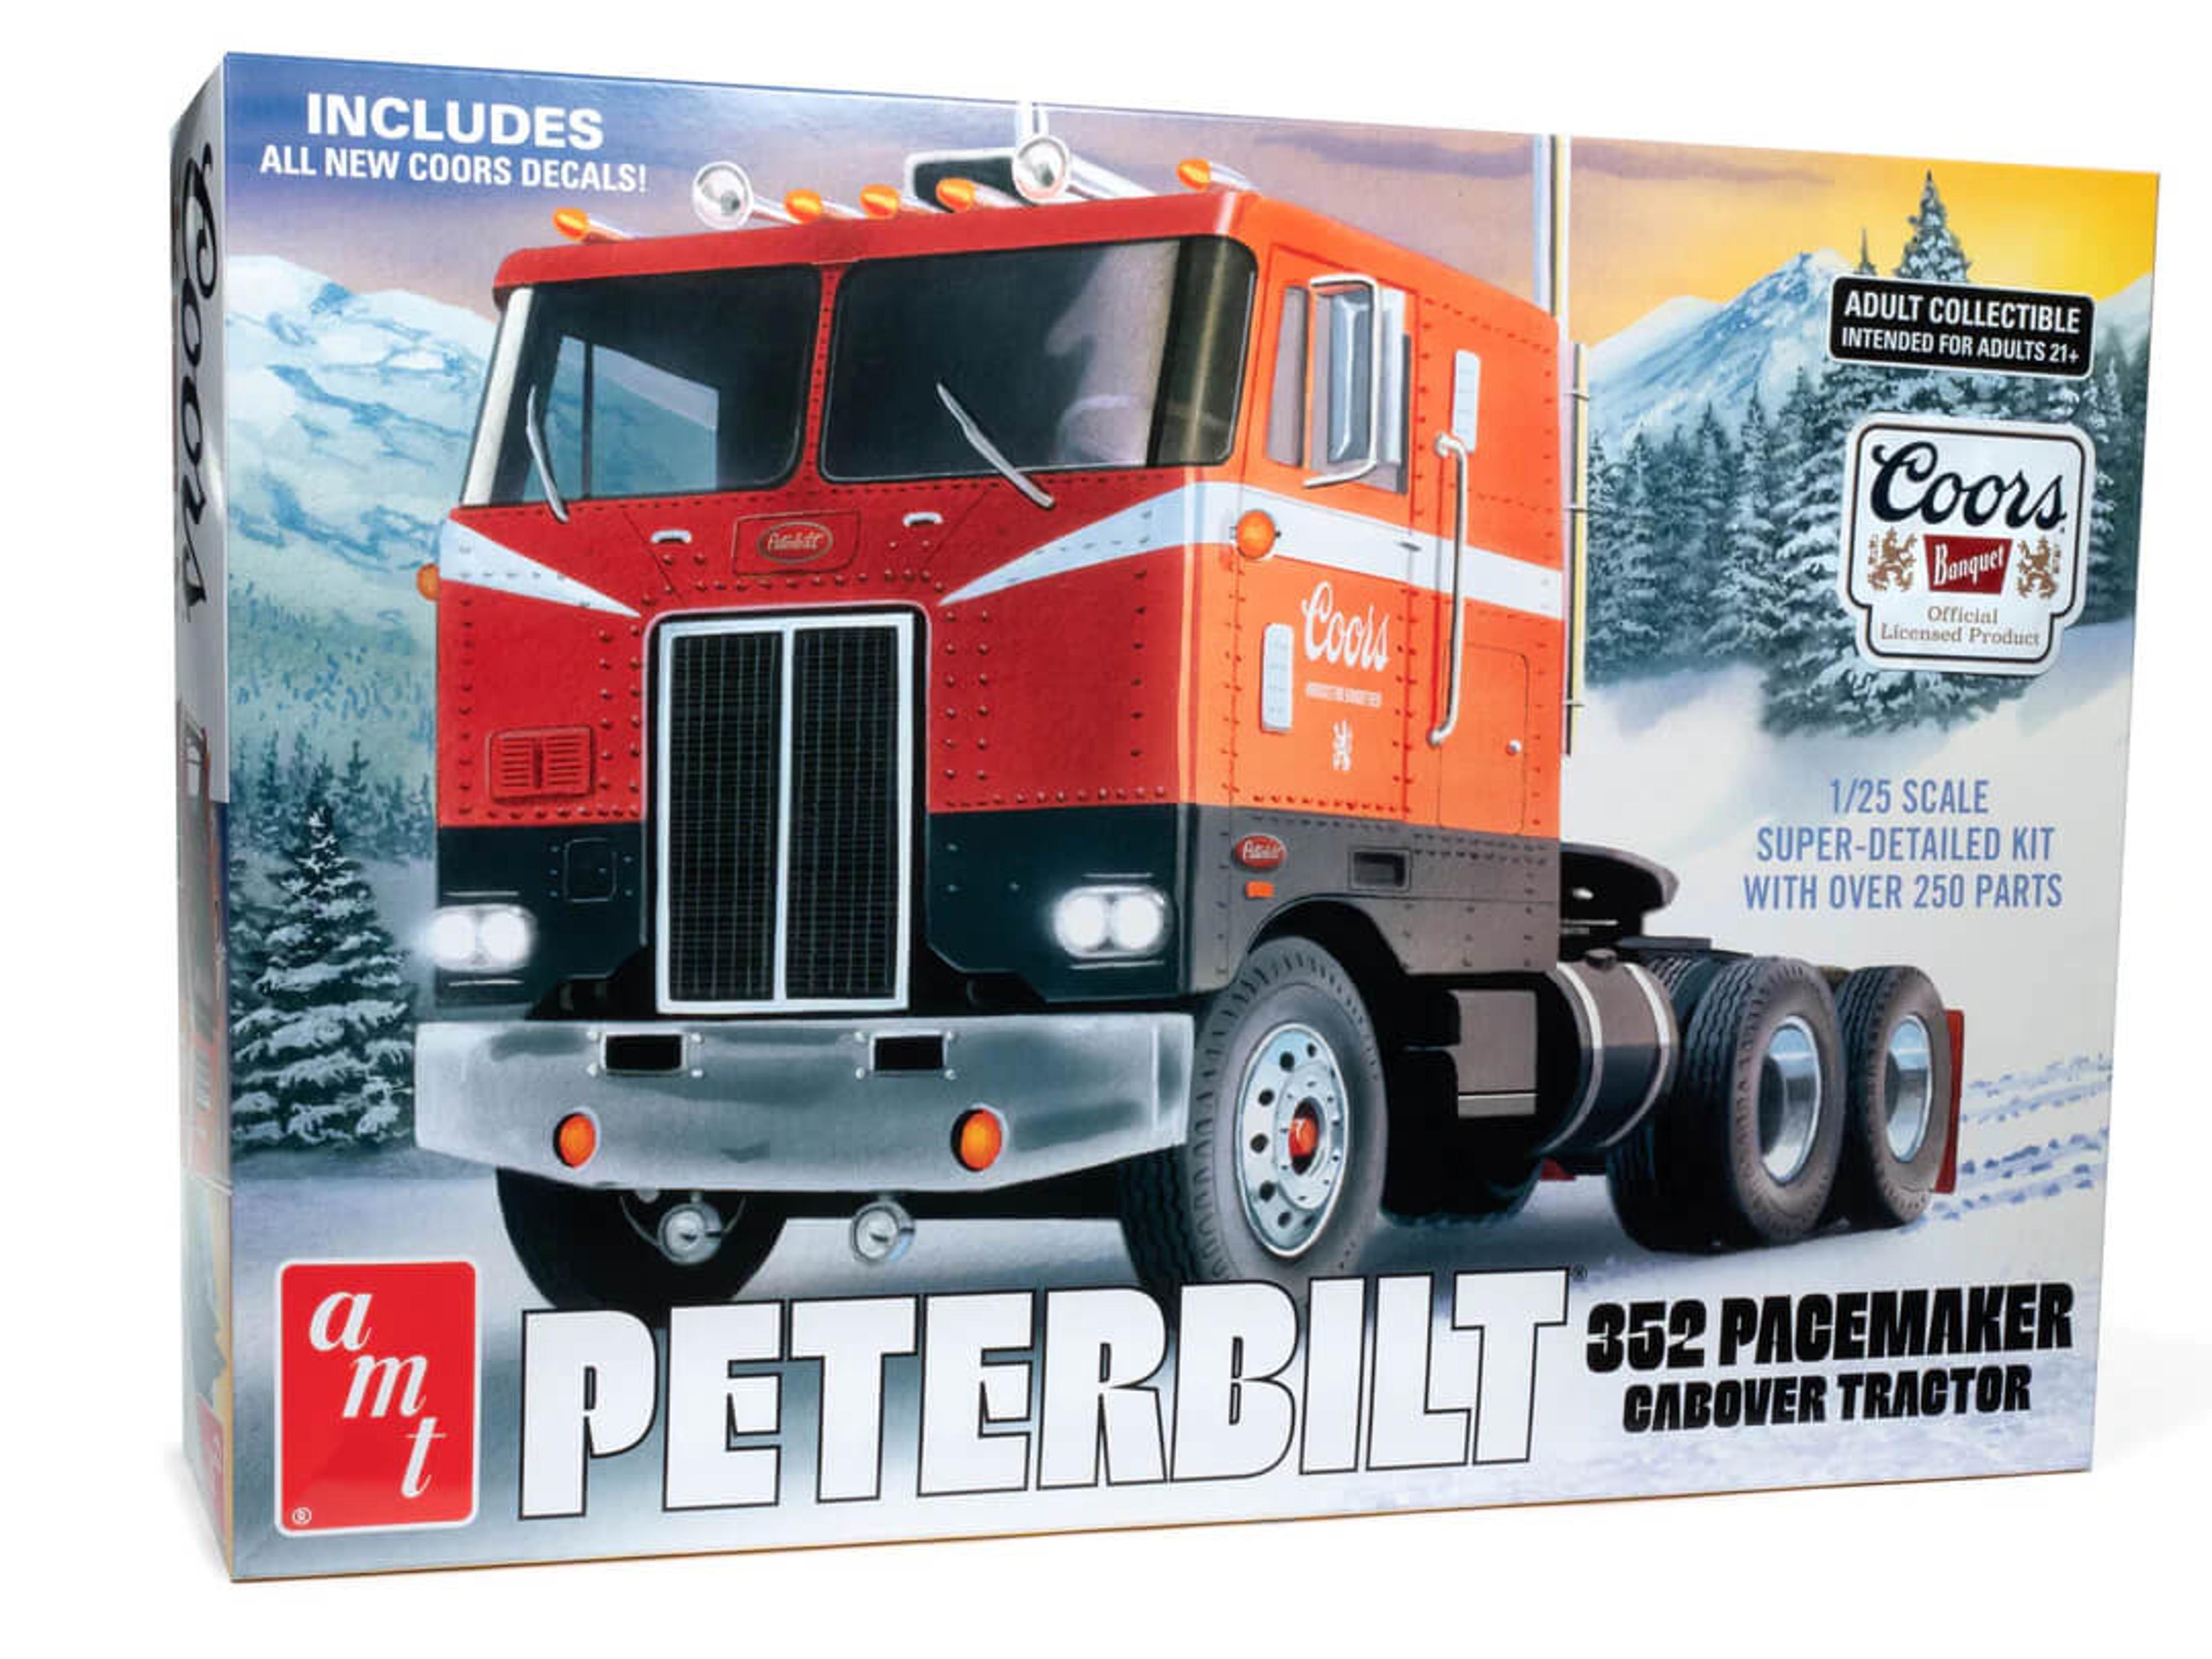 1/25 Peterbilt 352 Pacemaker COE Coors Beer Model Kit